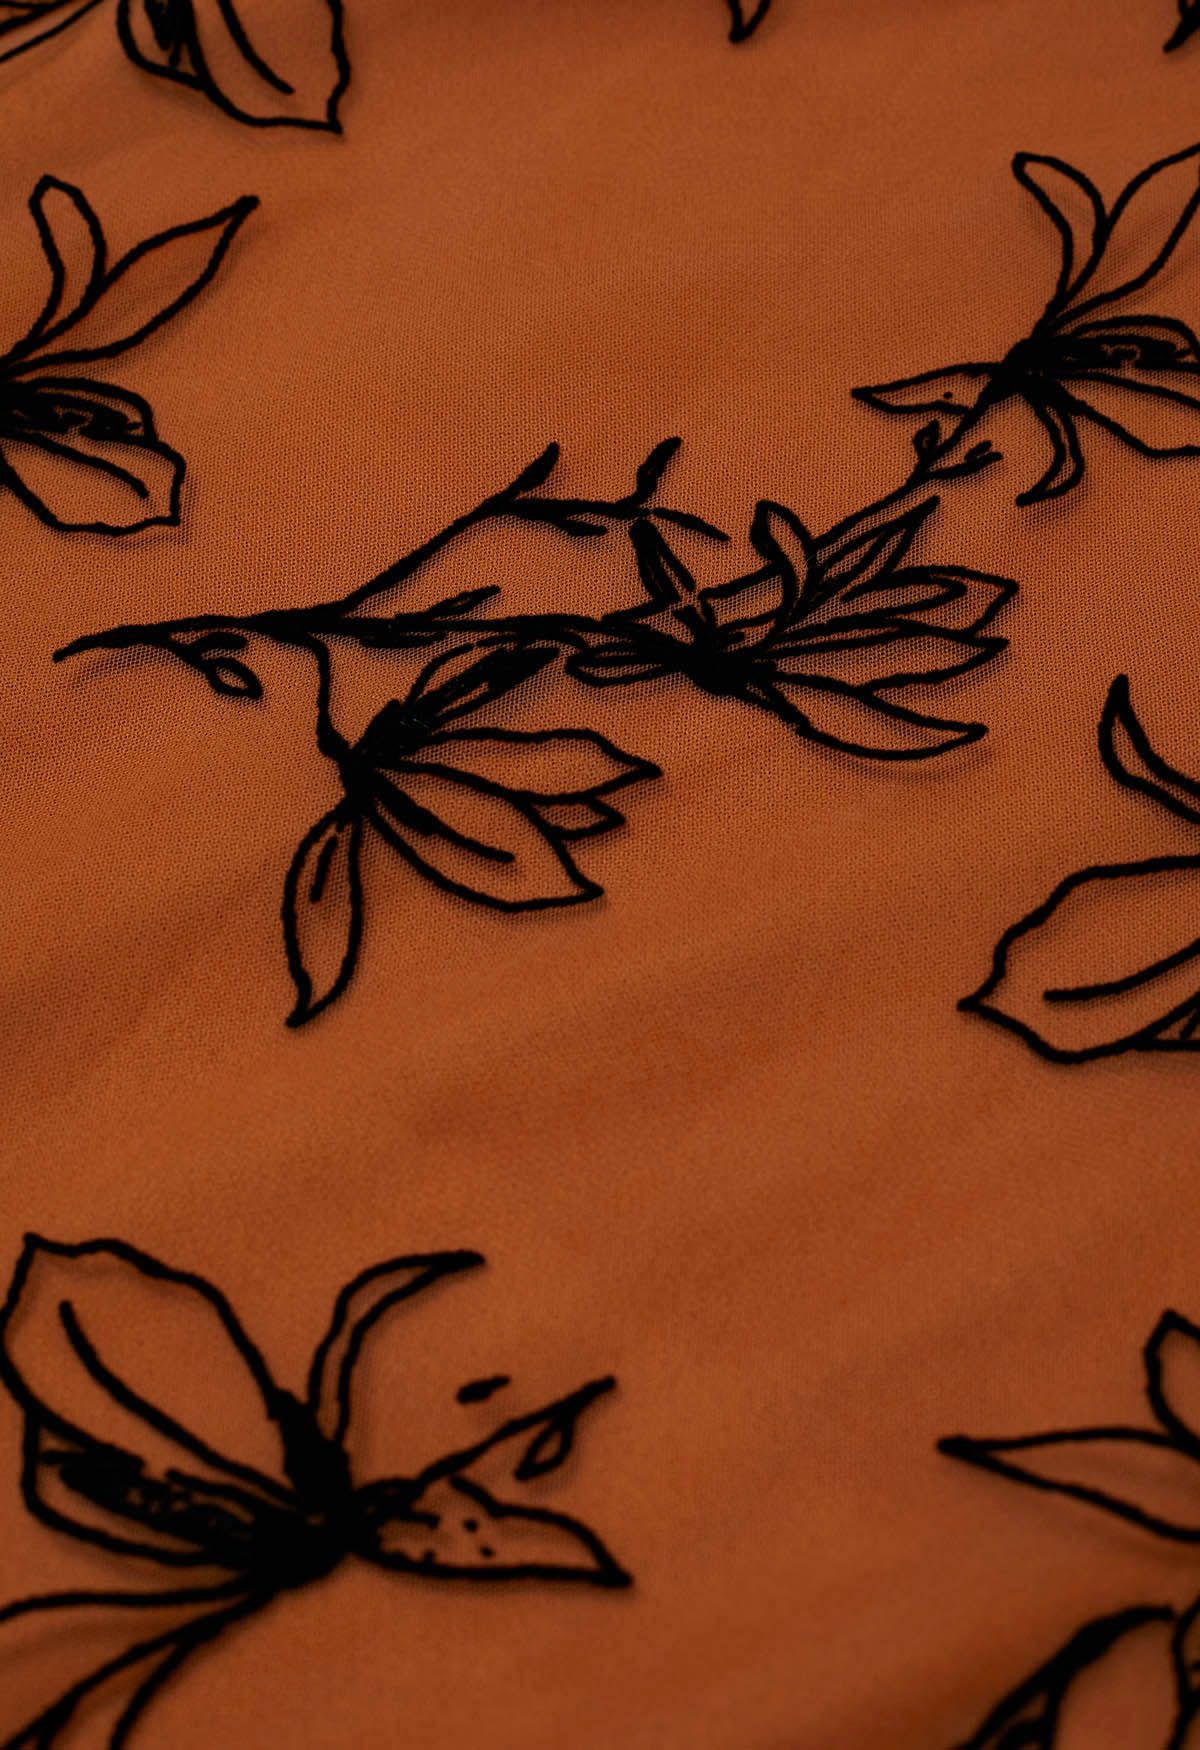 Falda larga de malla de doble capa Magnolia de terciopelo en naranja